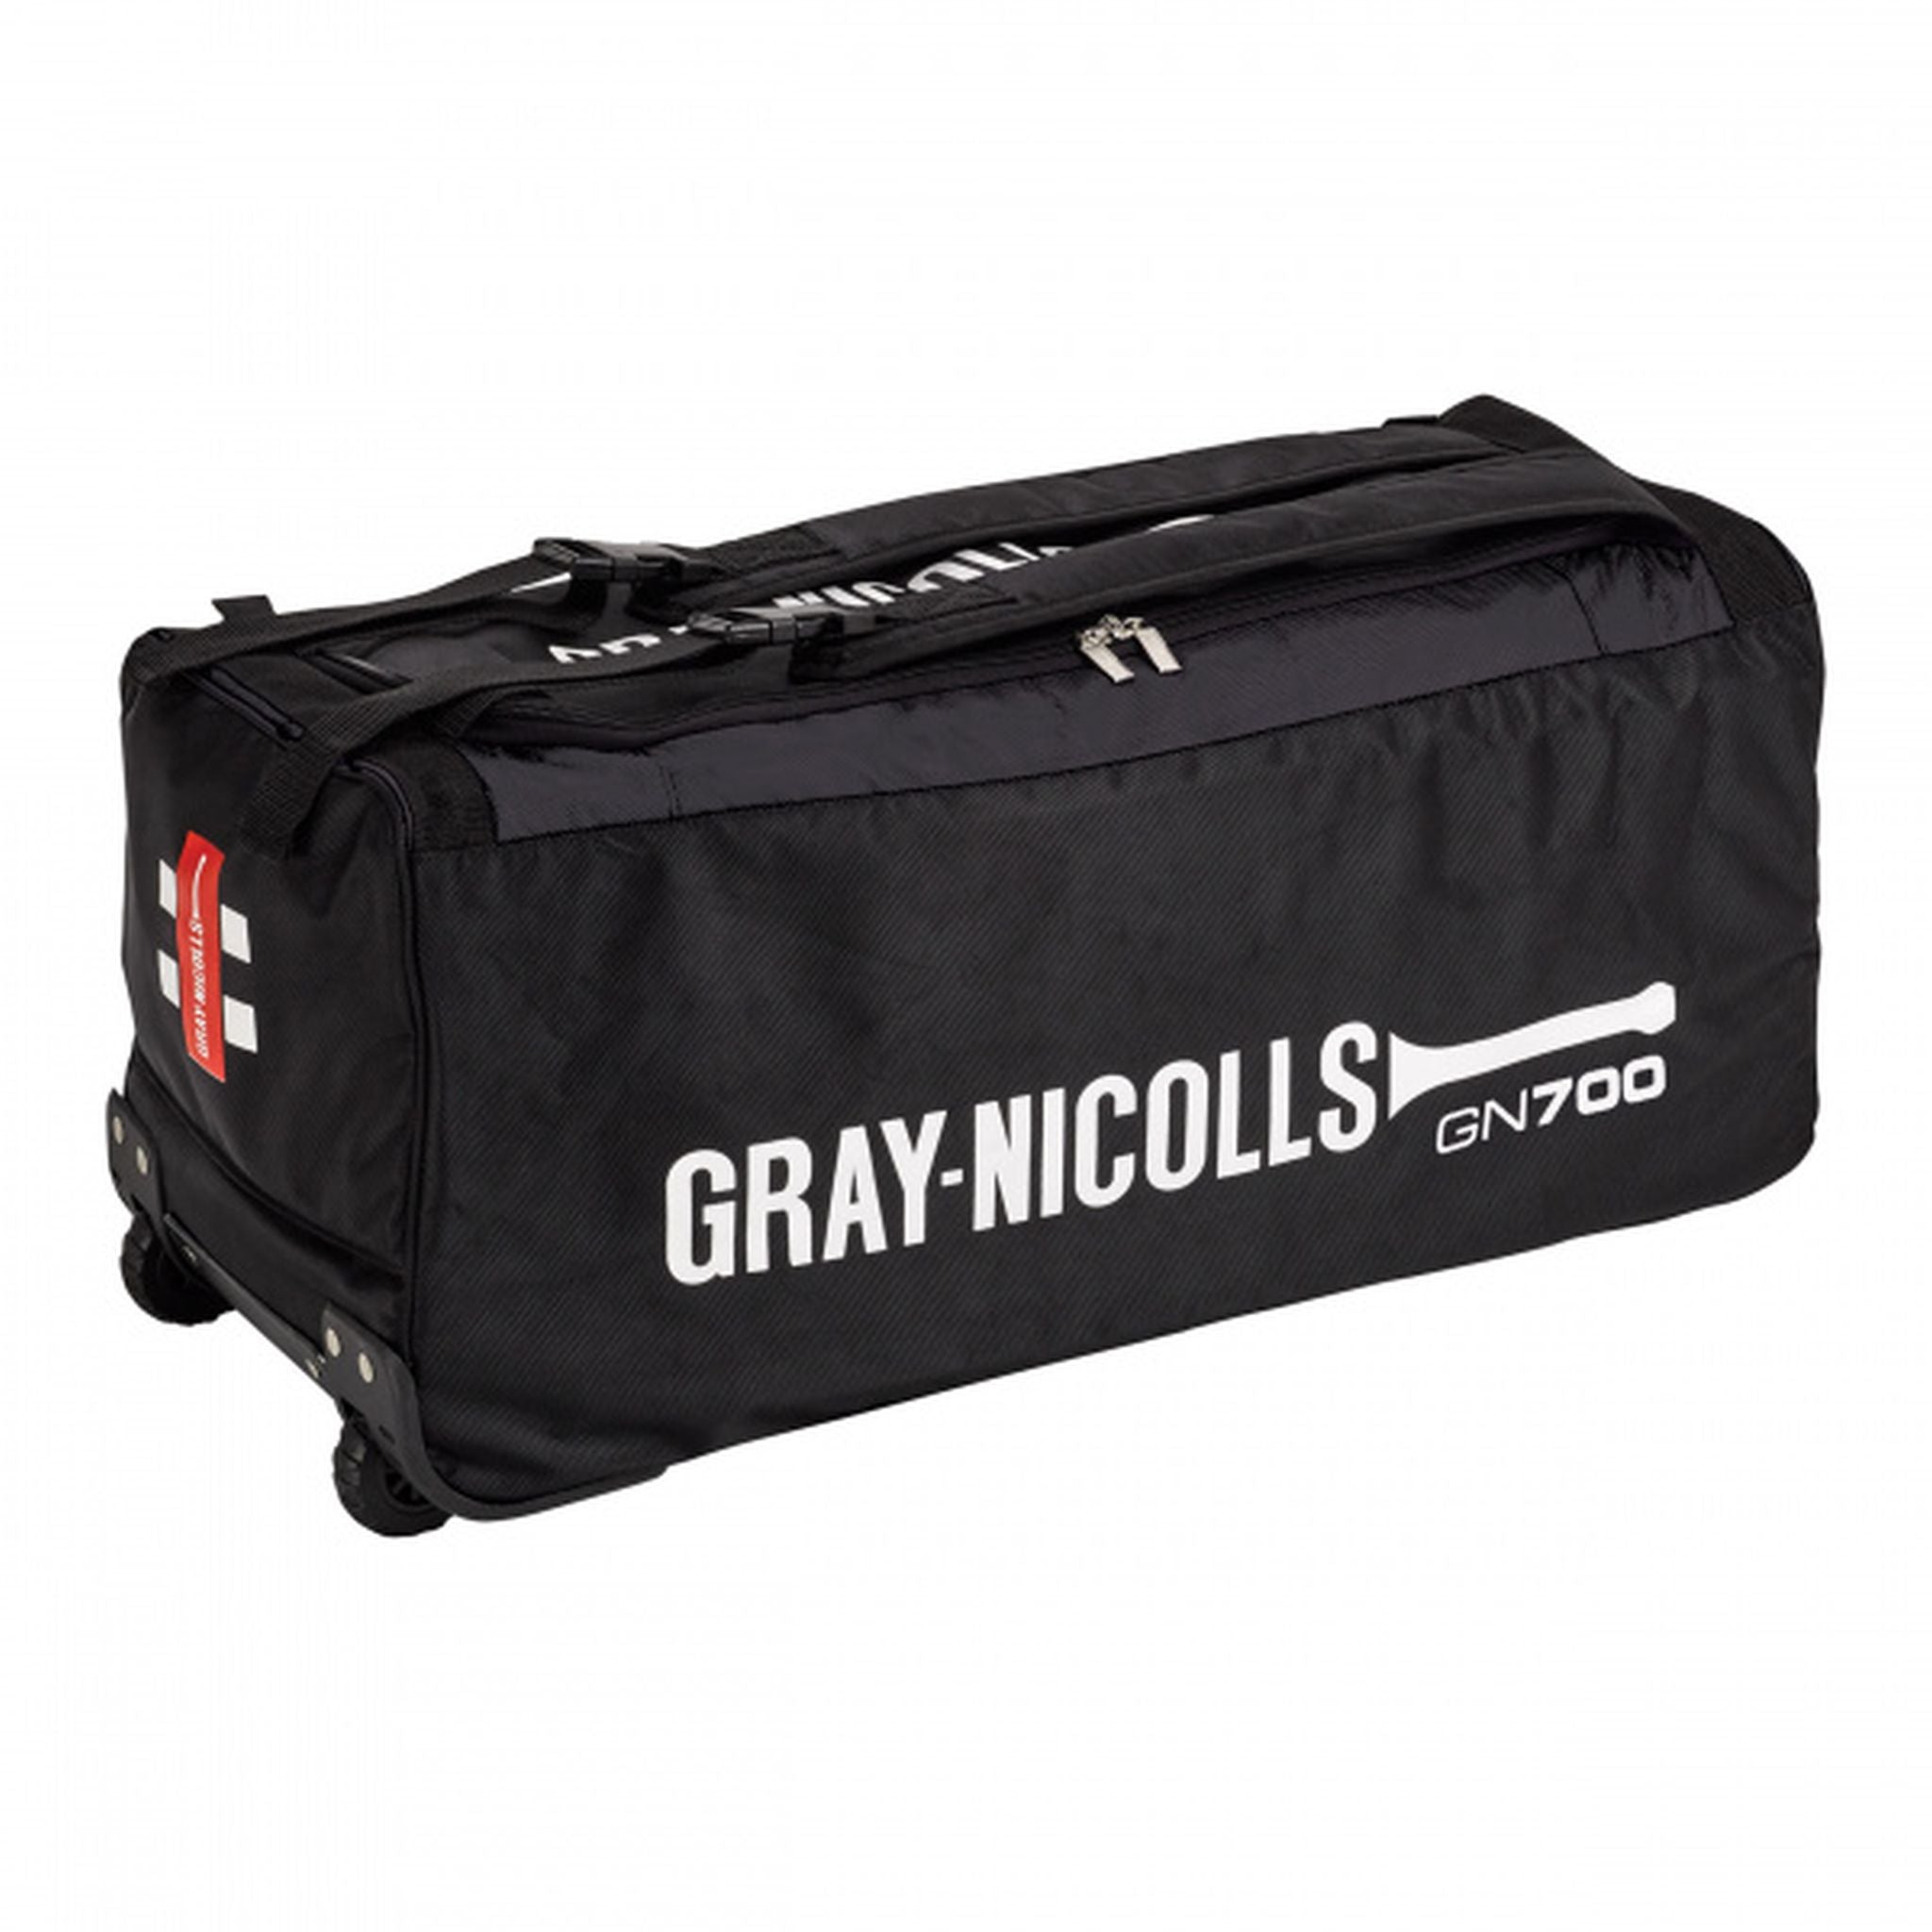 Gray-Nicolls 700 Cricket Wheel Bag